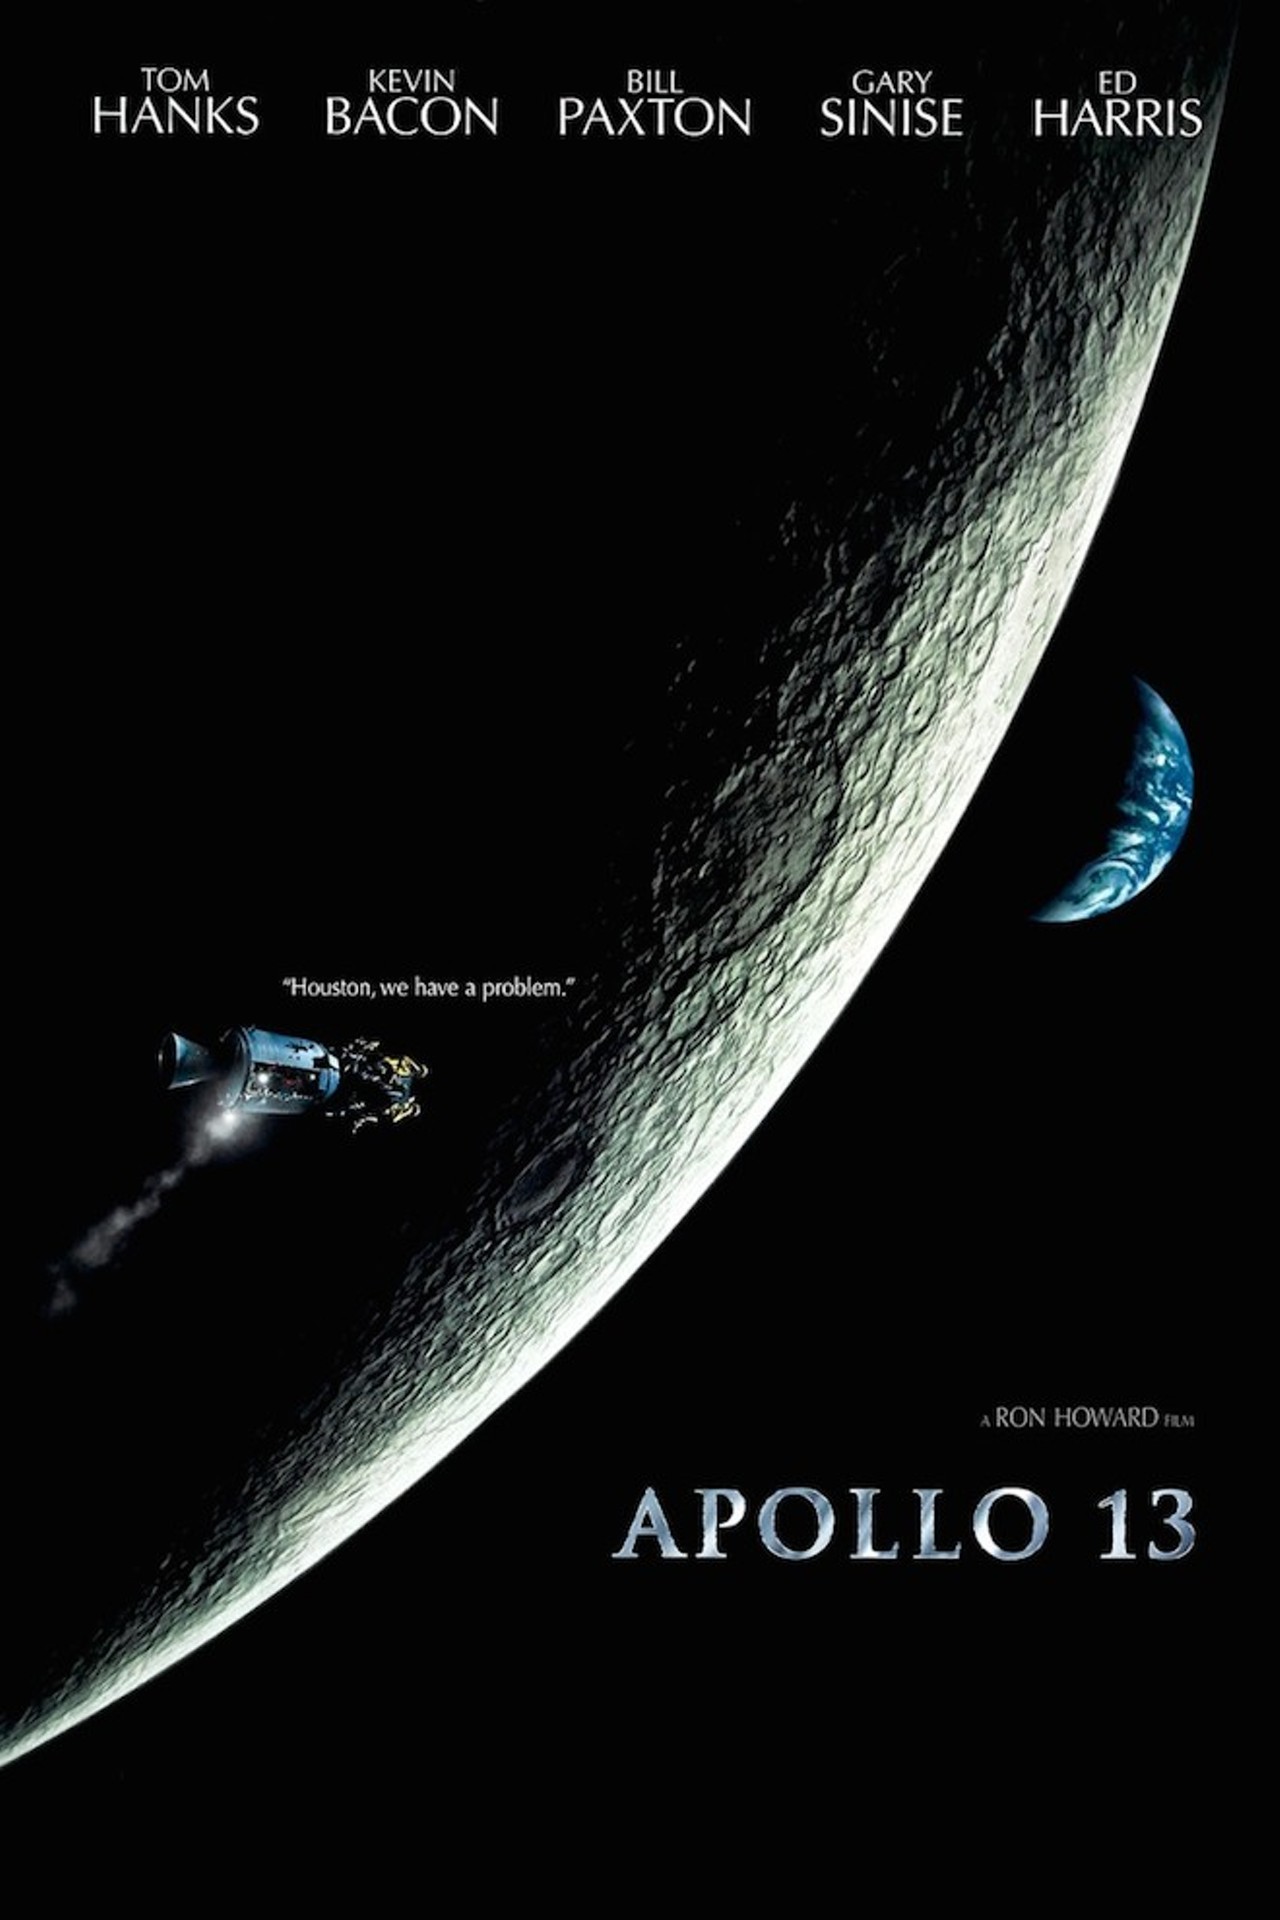 Apollo 13via